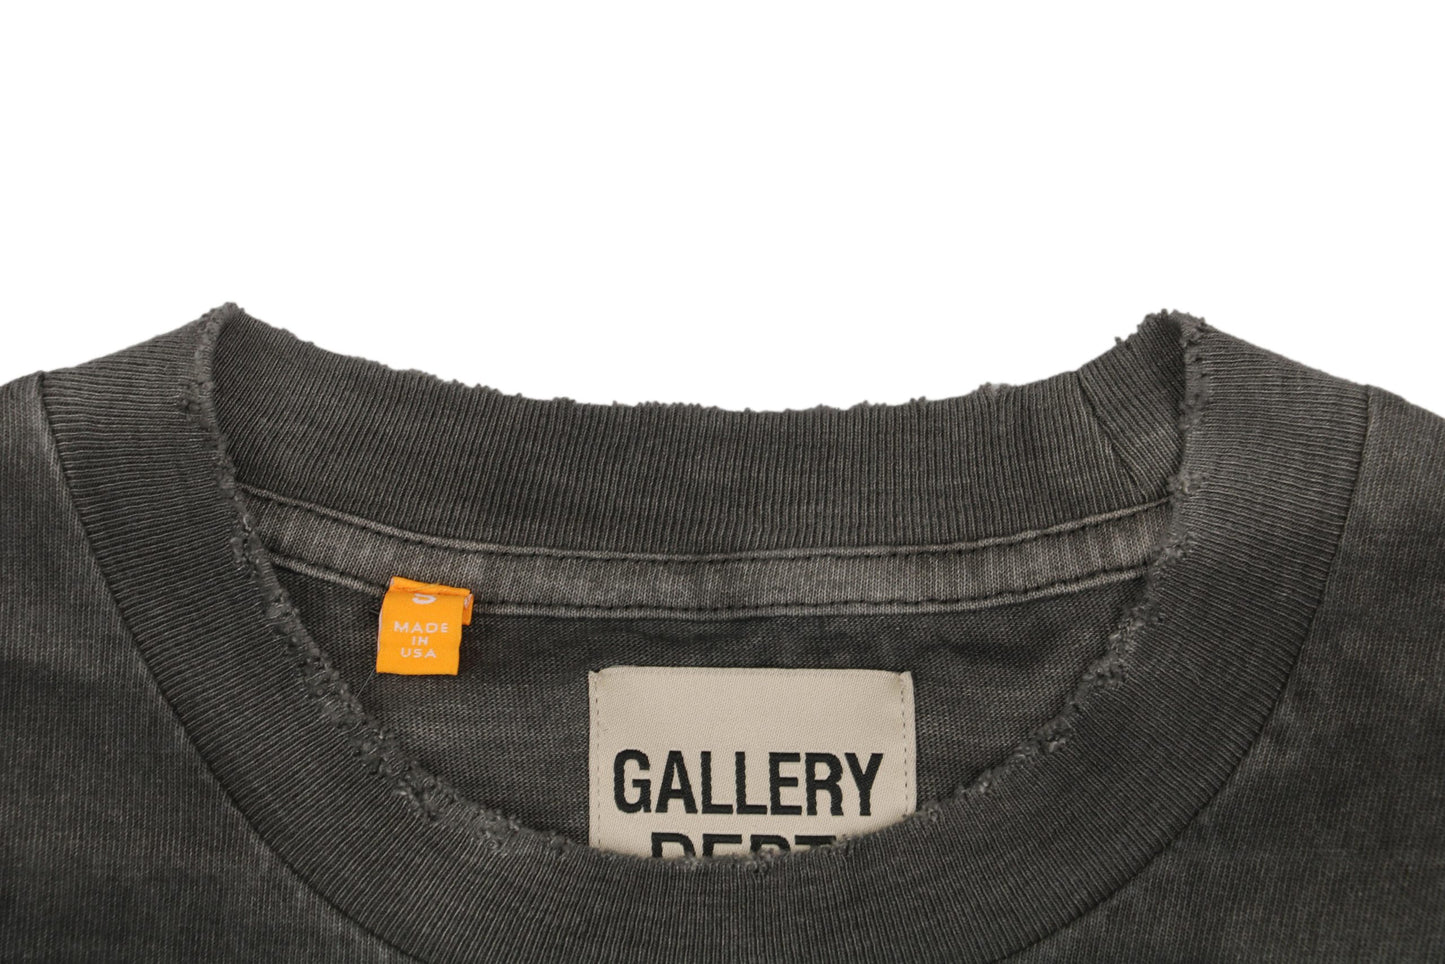 Gallery Dept Corona Virus Black T-Shirt